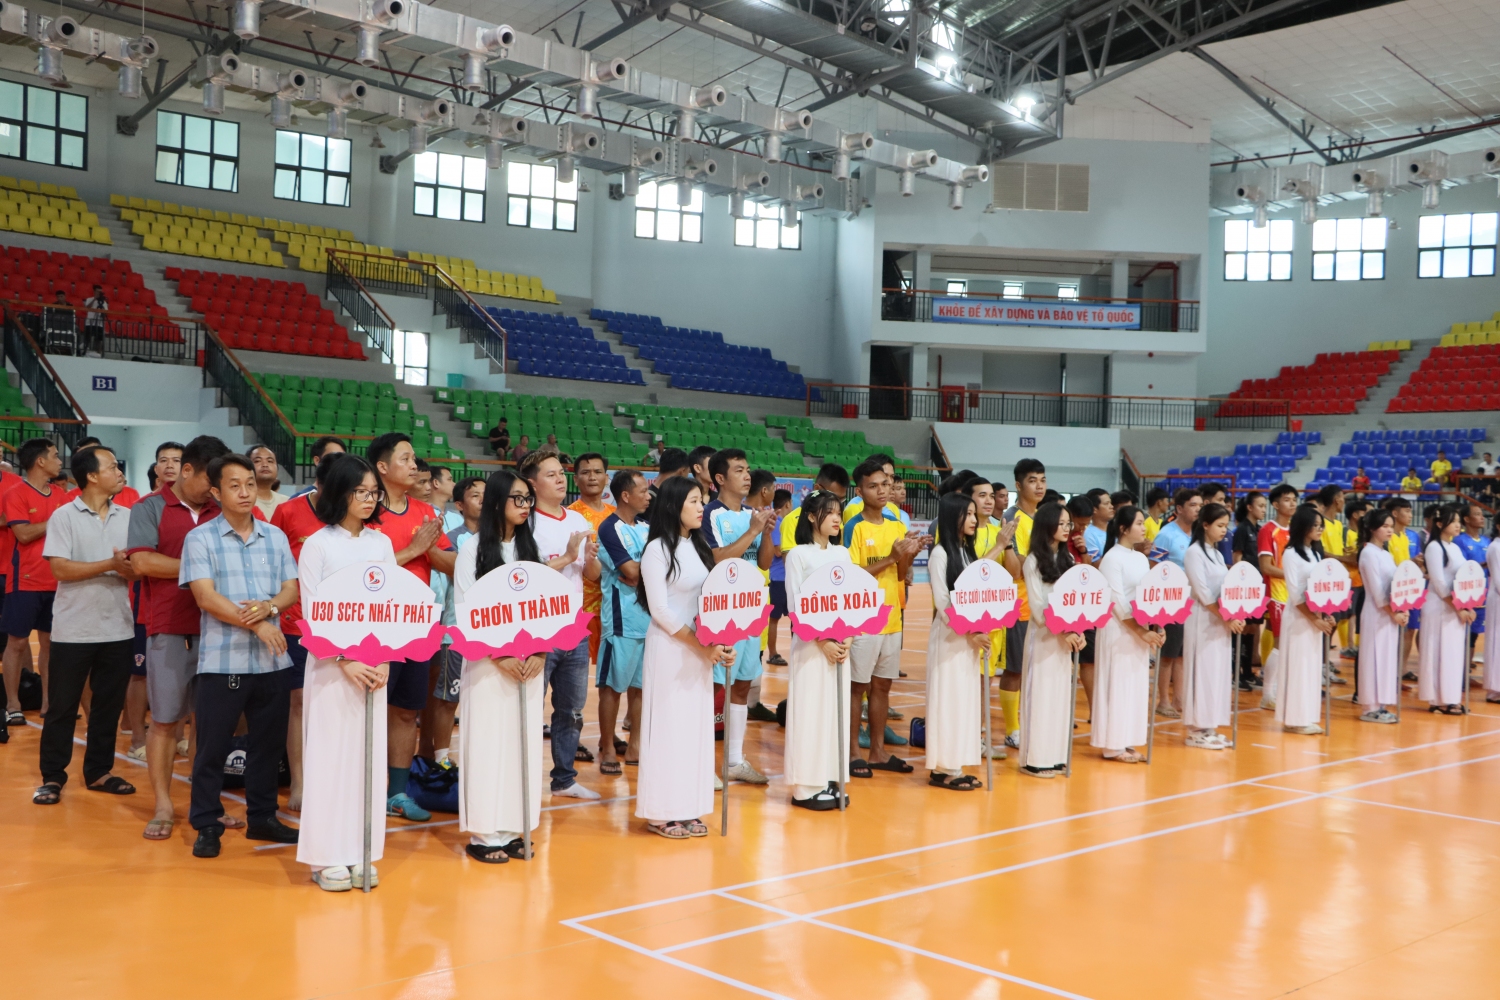 Opening ceremony of Binh Phuoc province football championship